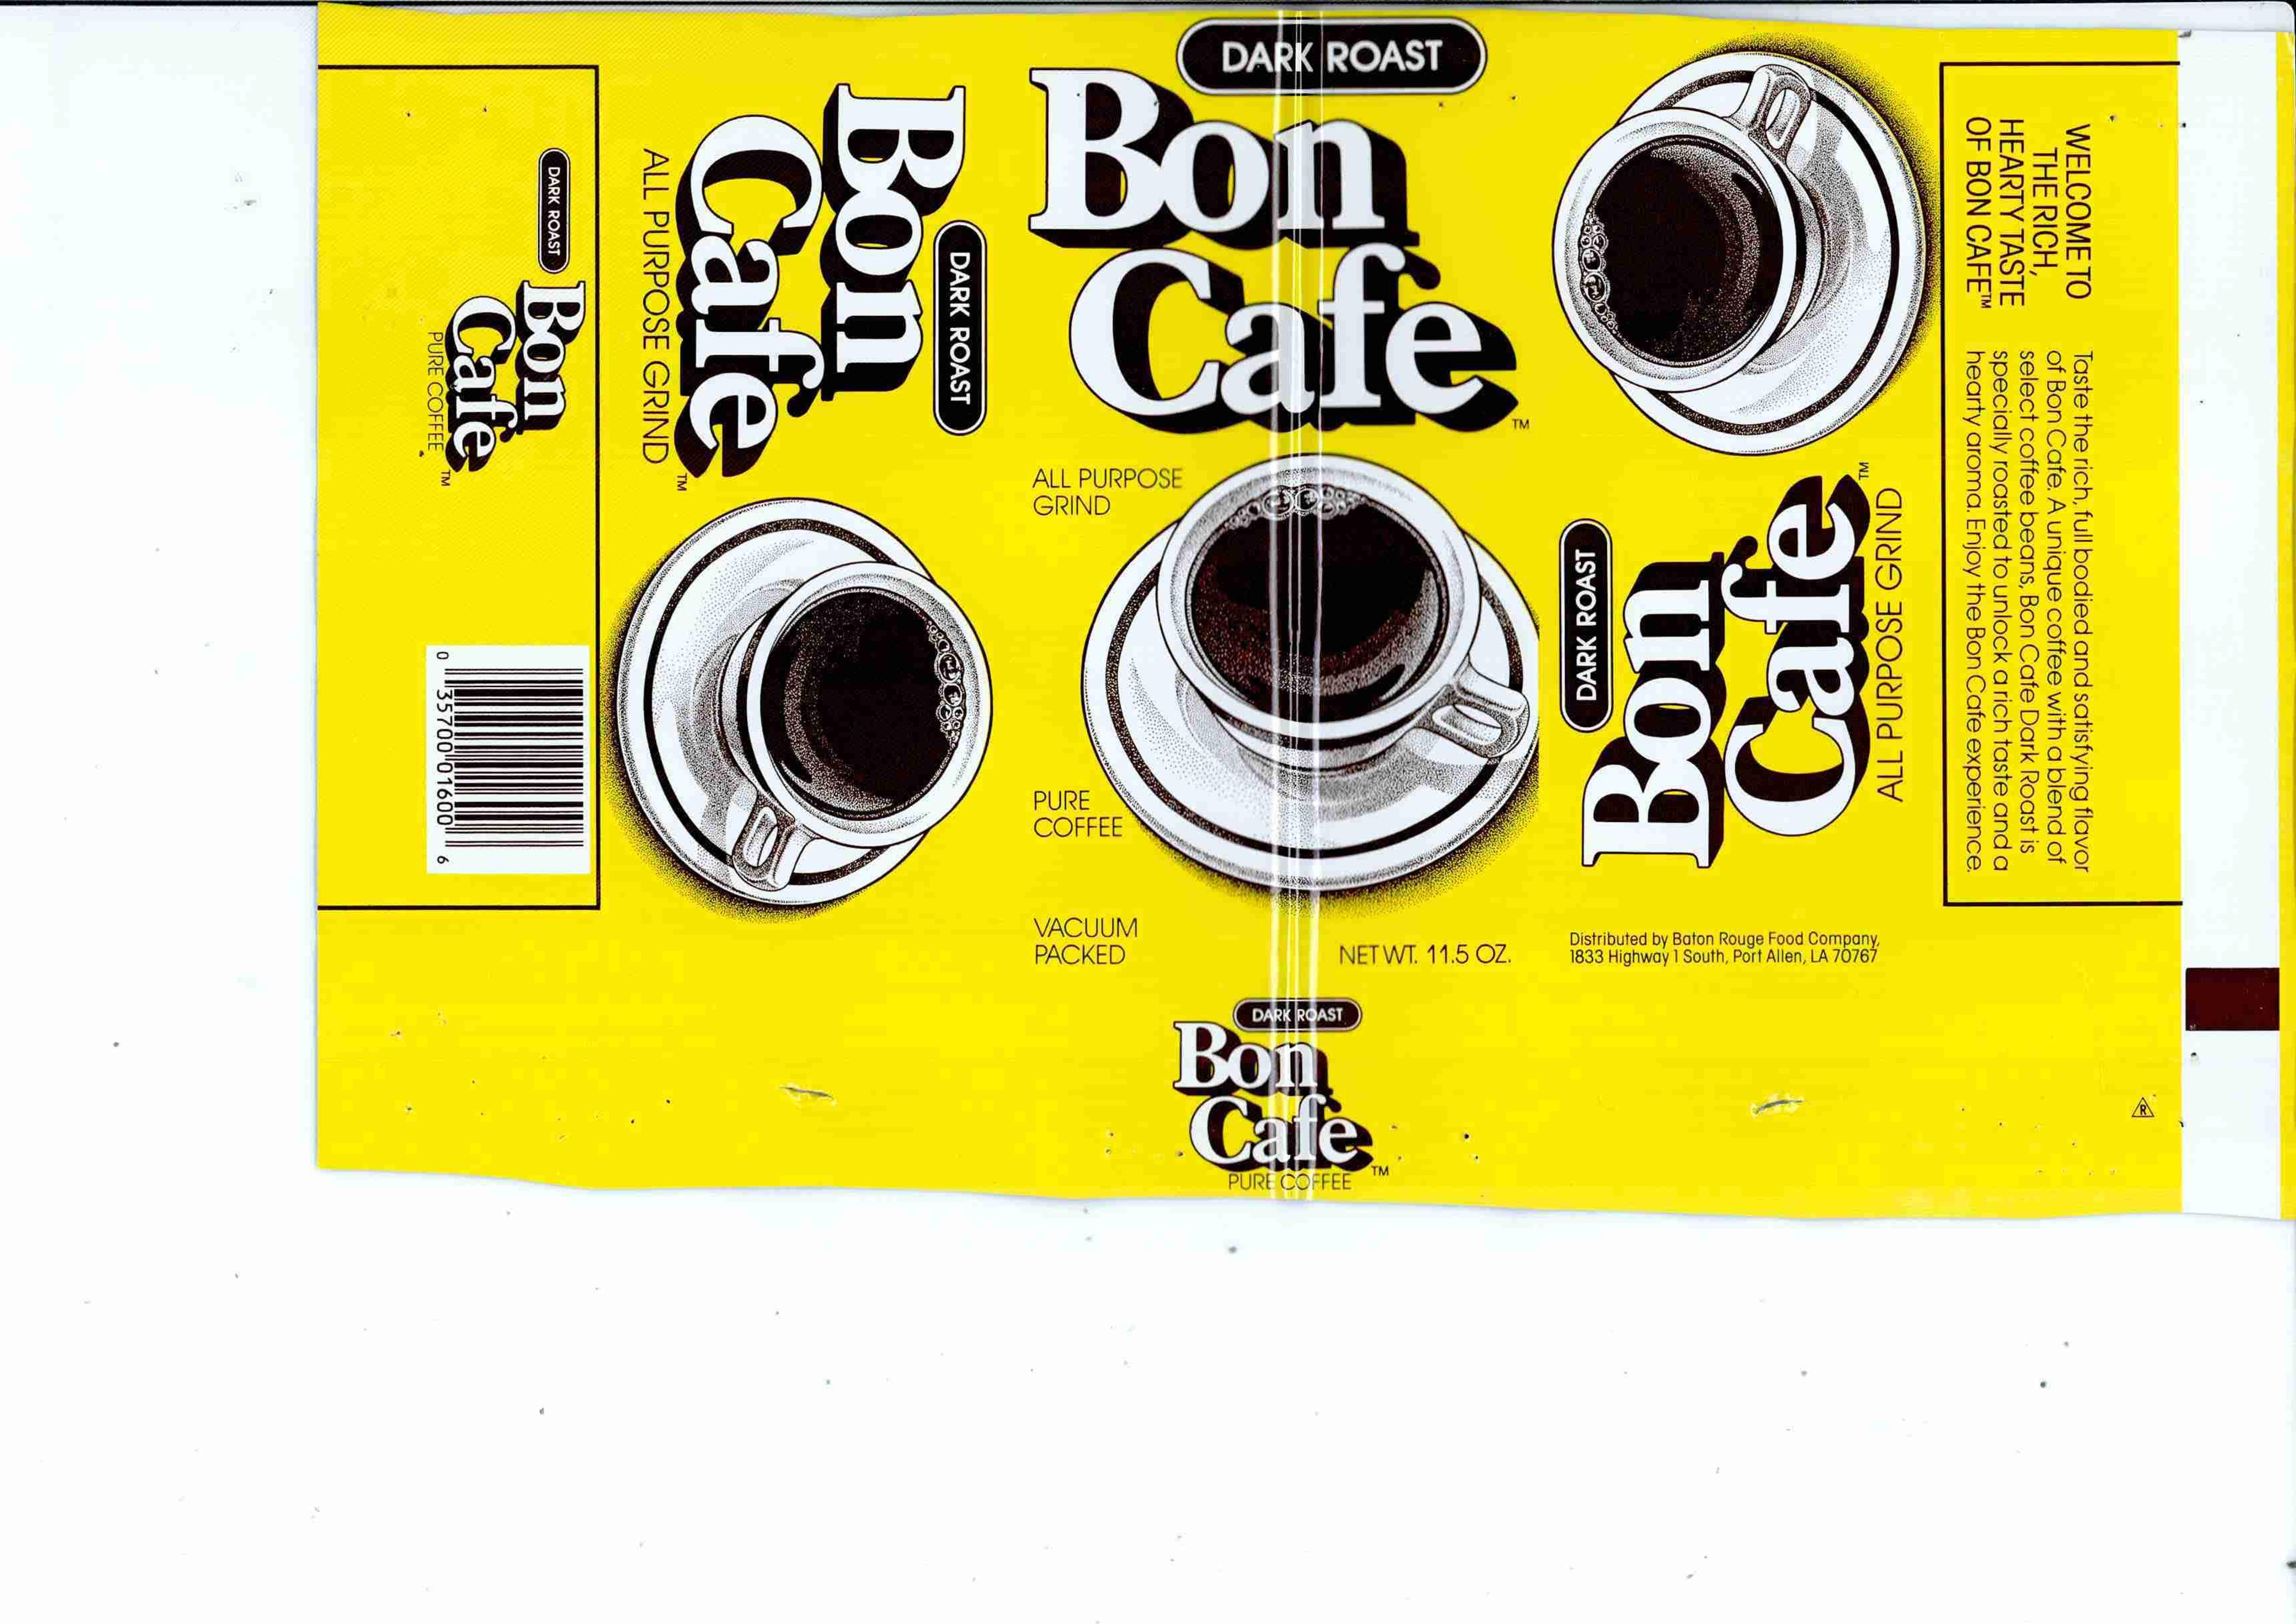  BON CAFE